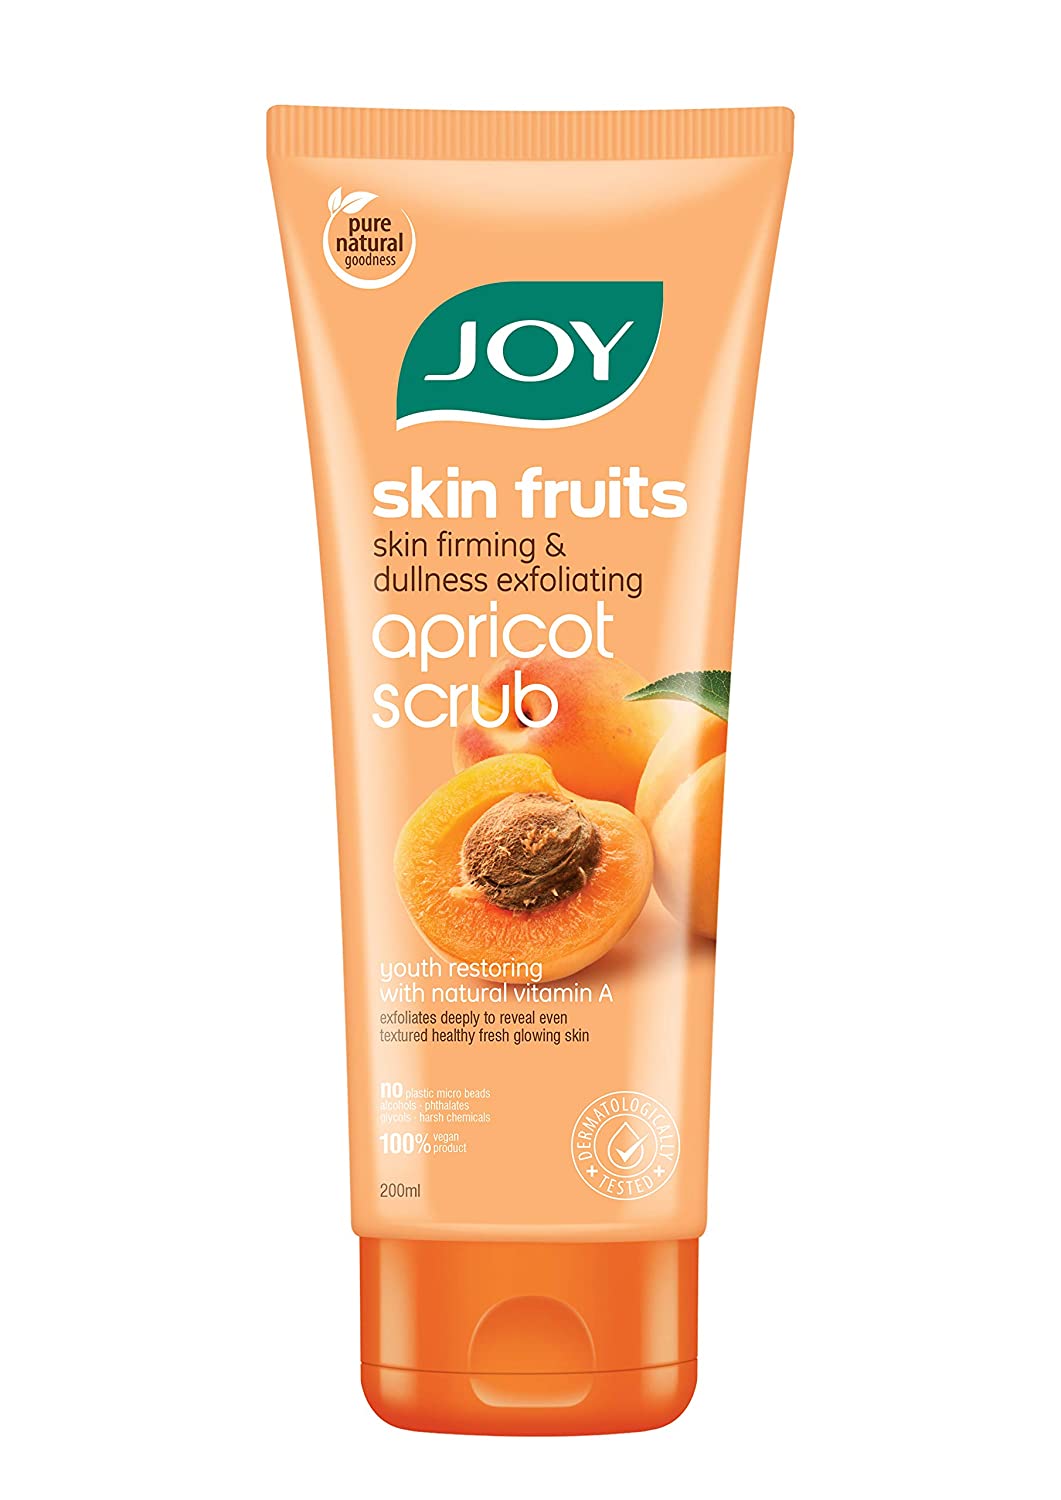 Joy Skin Fruits Apricot Scrub (200ml), joy scrub